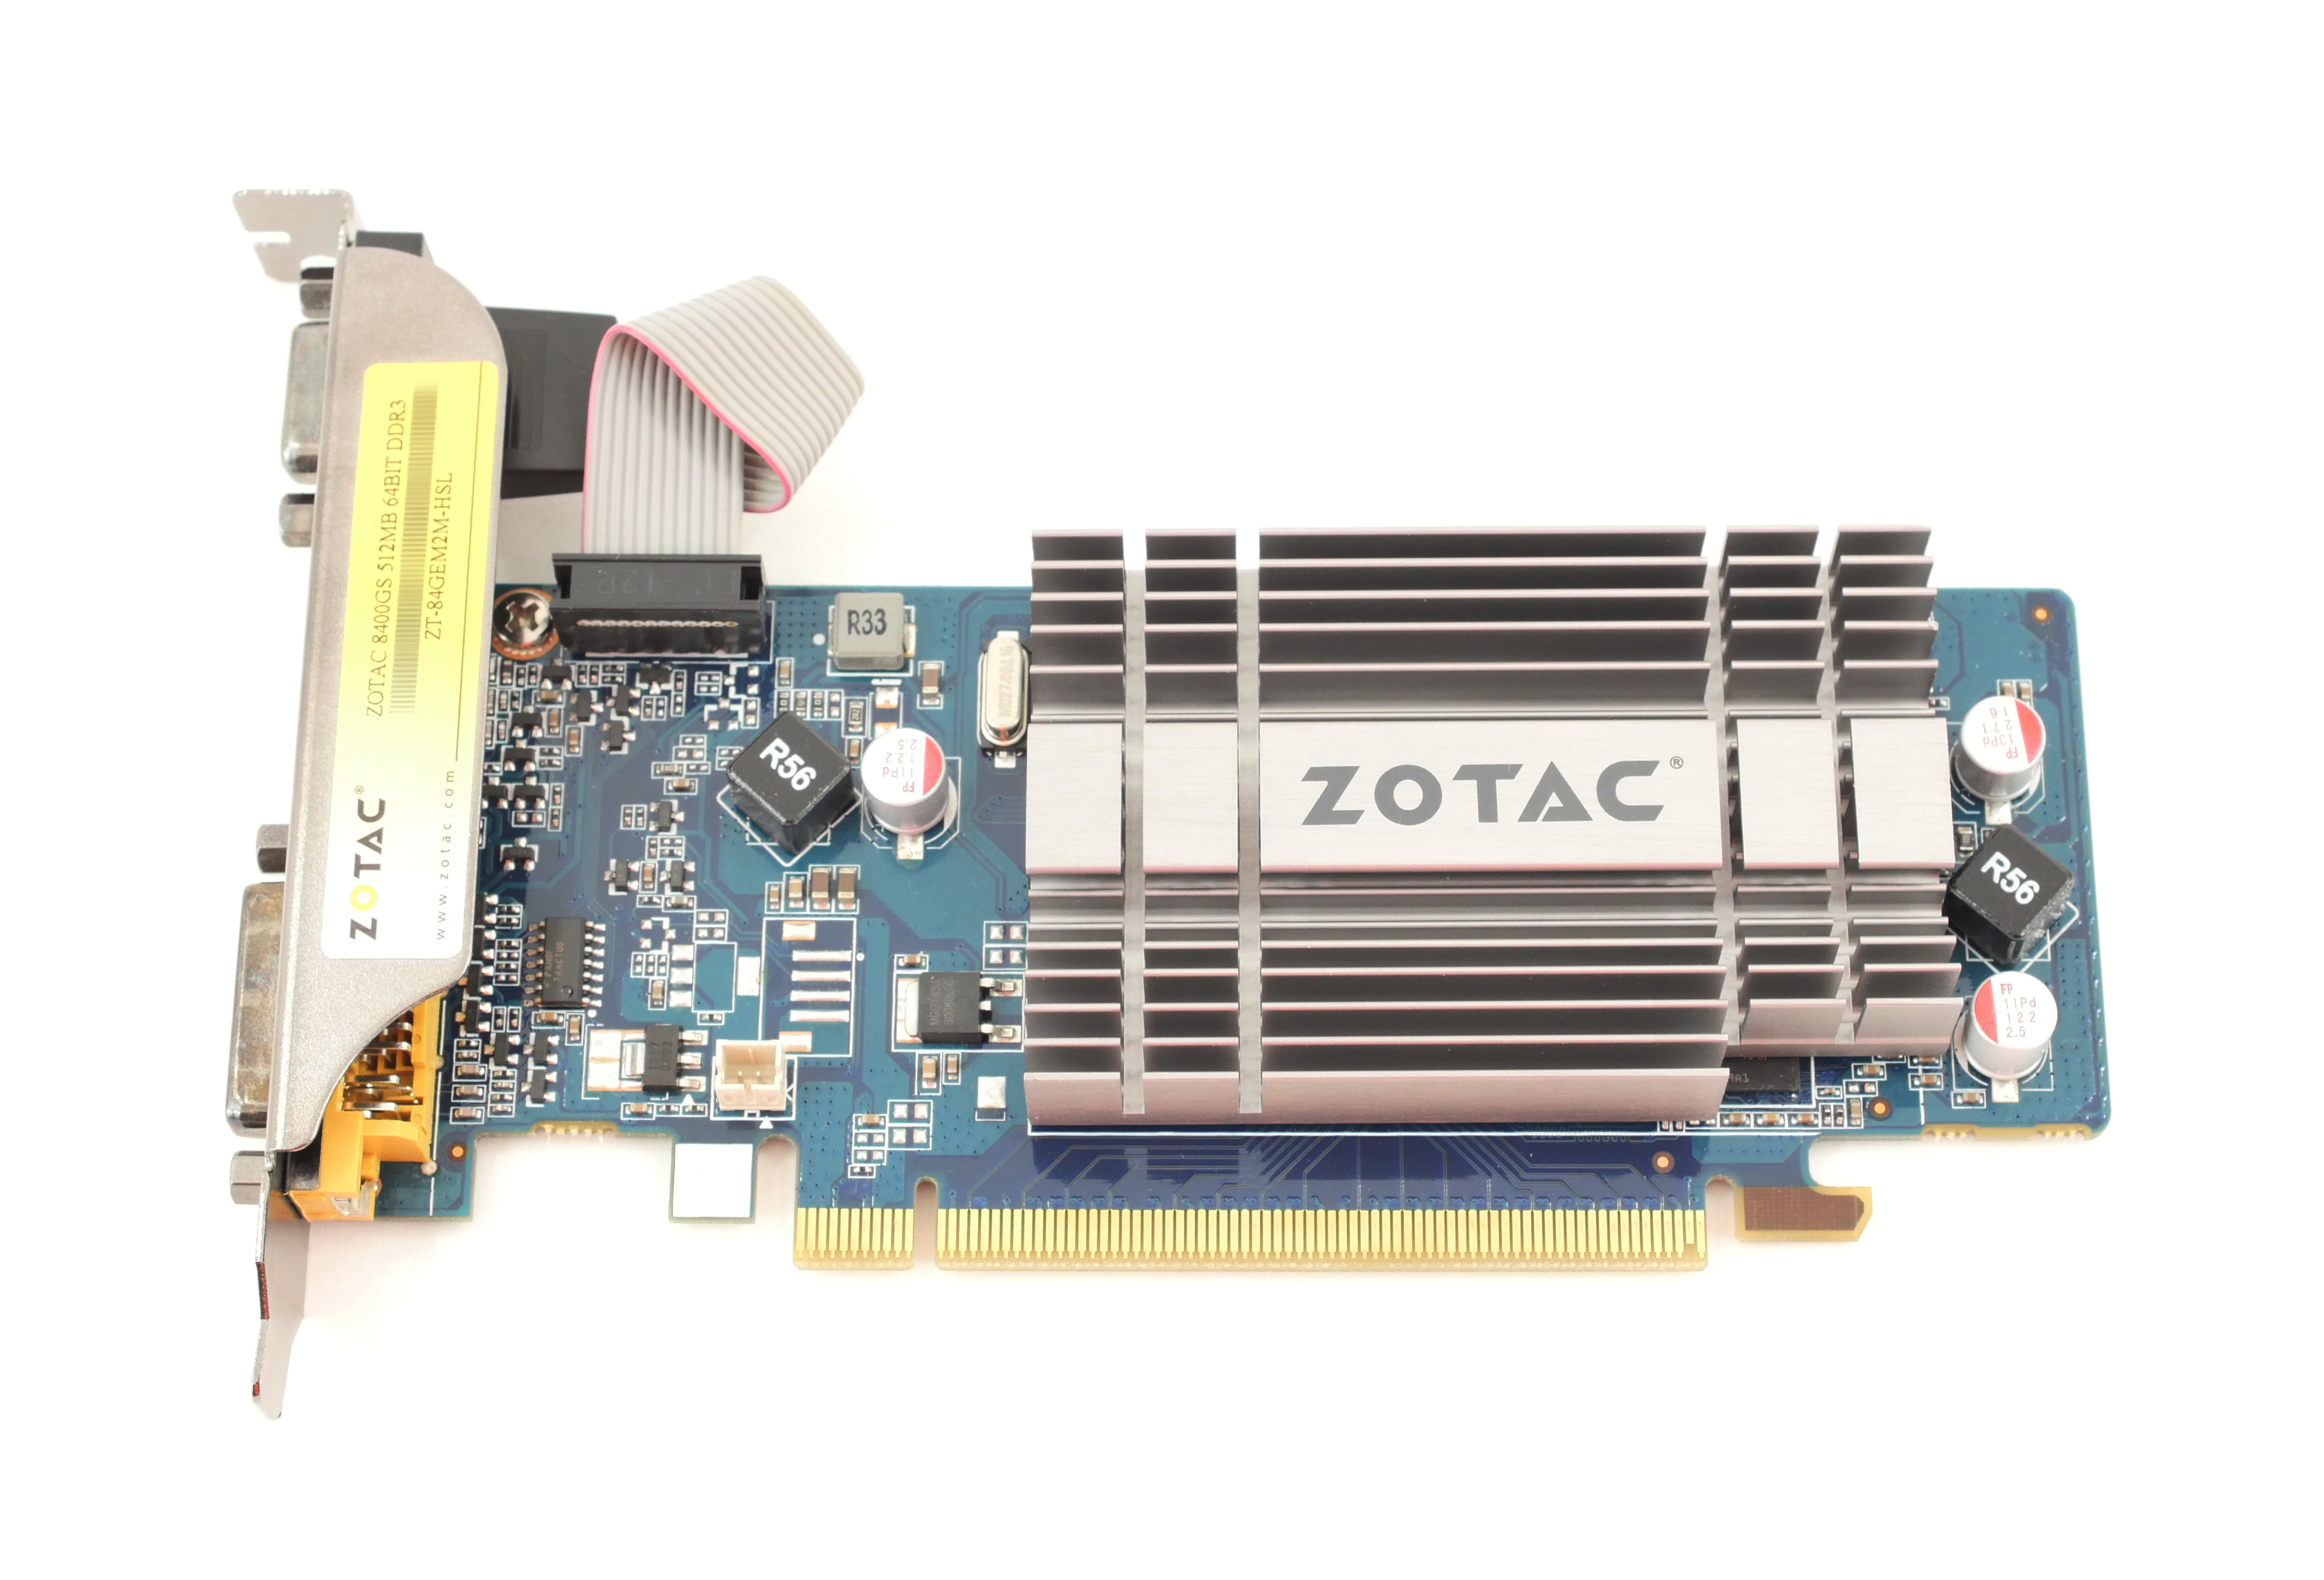 Zotac 8400GS 512MB DDR3 PCIe x16 DVI HDMI VGA 288-3N158-001ZT ZT-84GEM2M-HSL - Click Image to Close